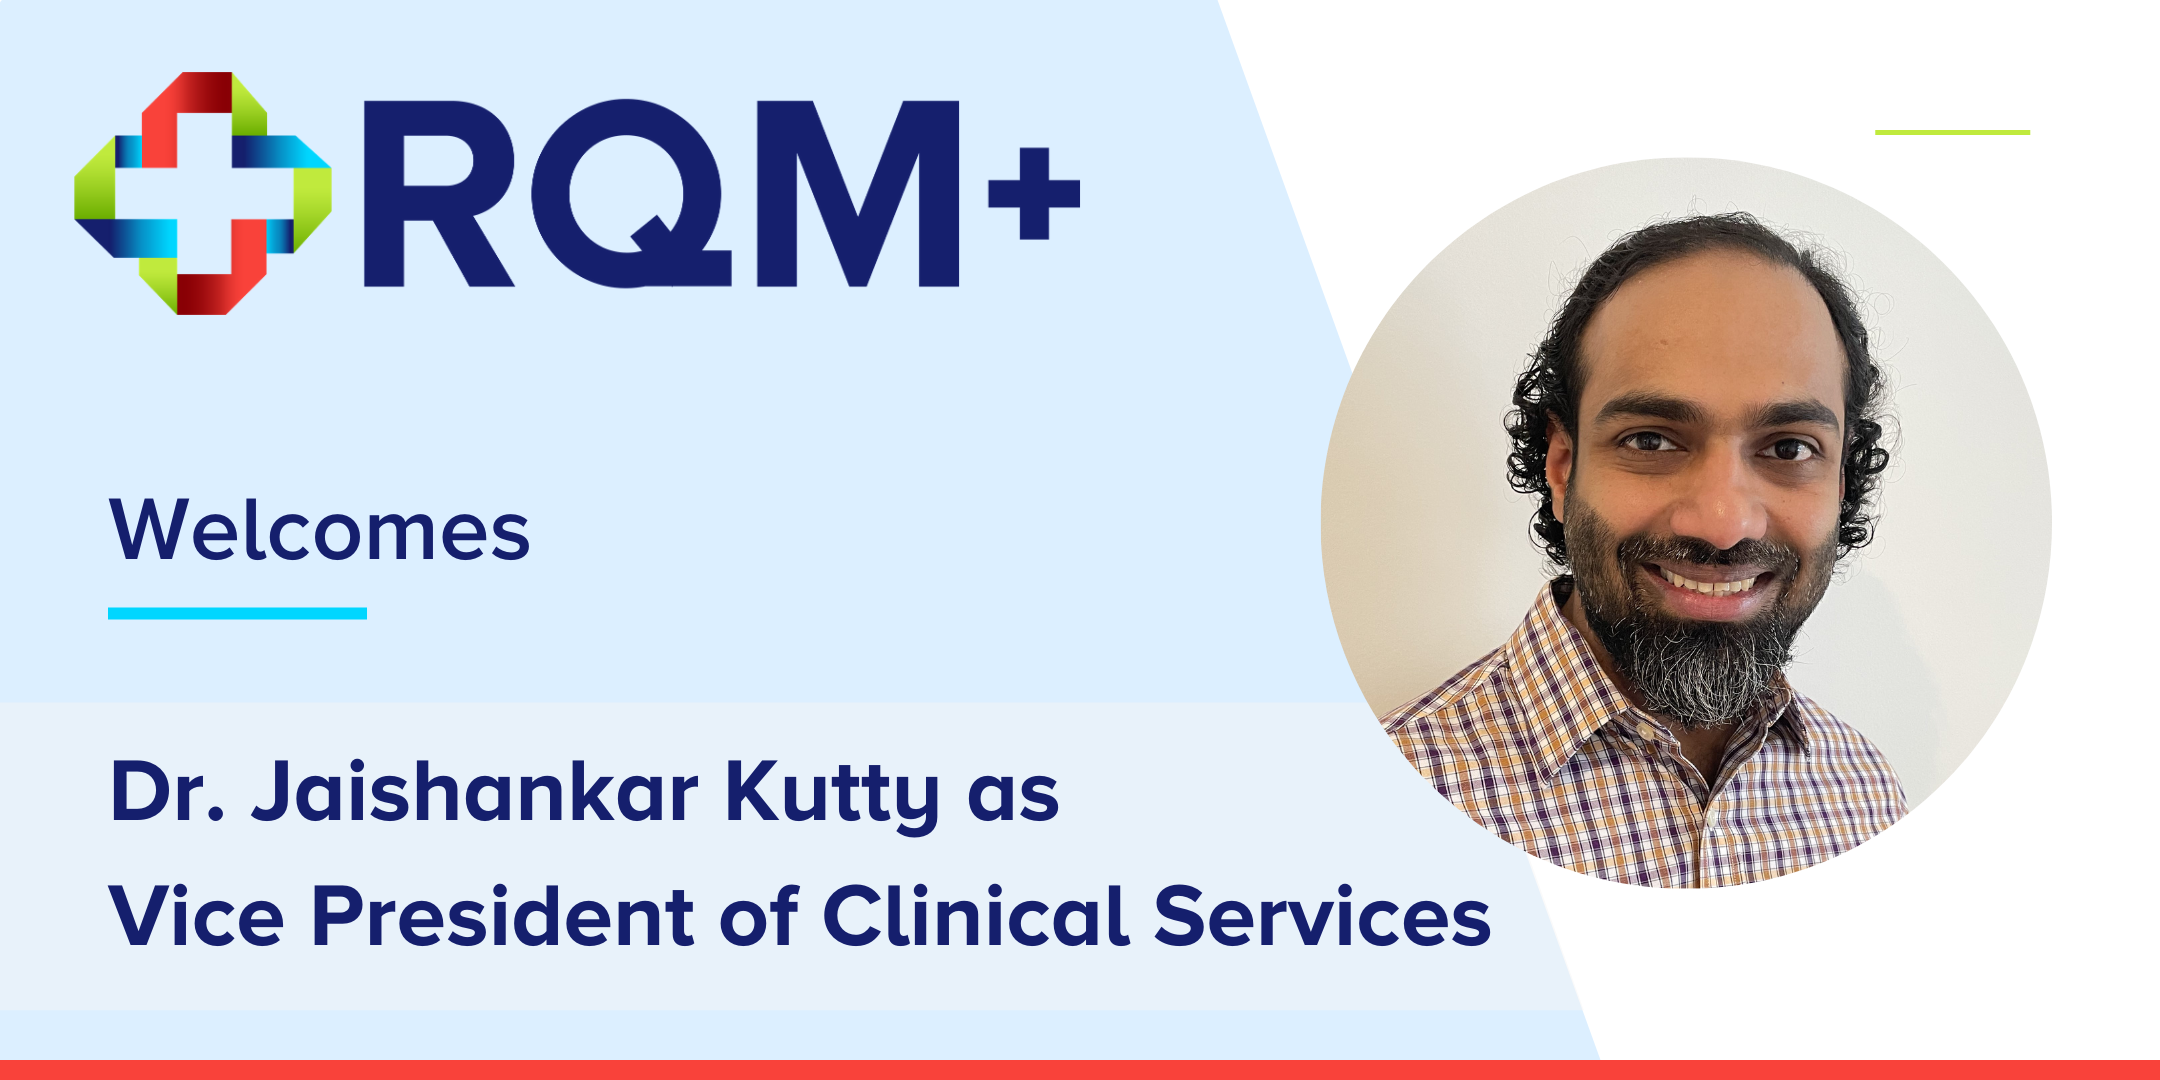 Dr. Jaishankar Kutty Joins RQM+